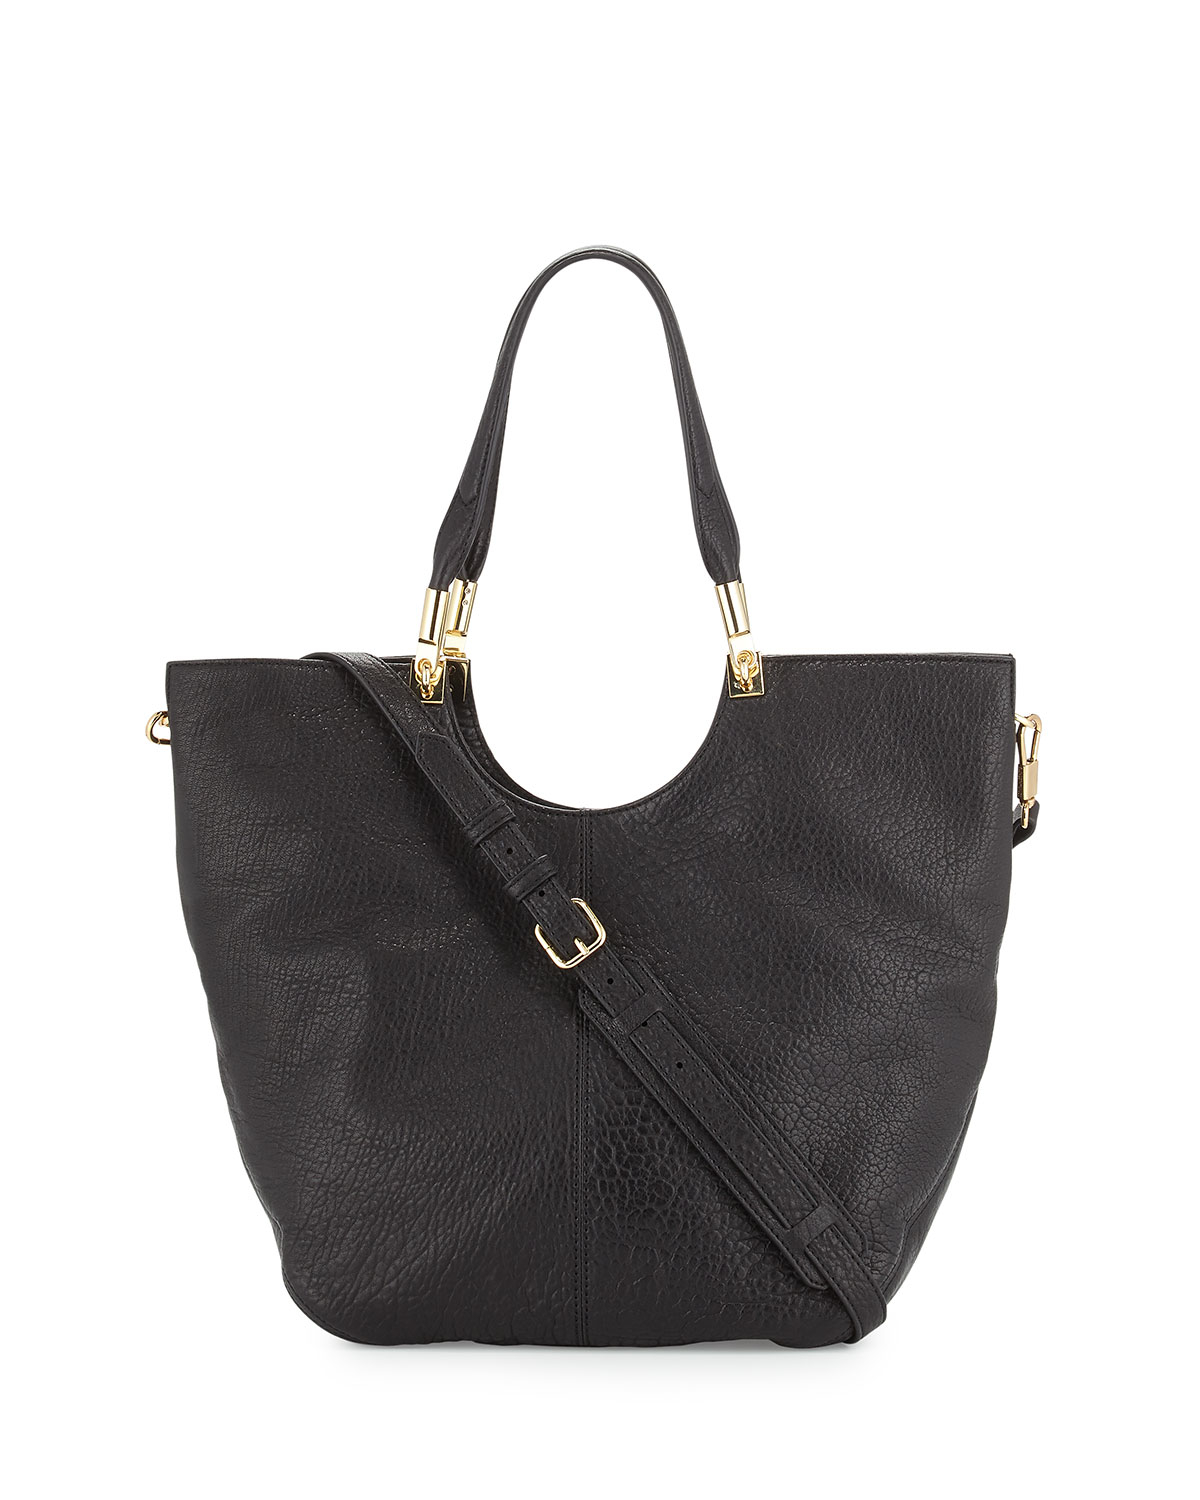 Elizabeth and james Convertible Large Shopper Bag in Black | Lyst